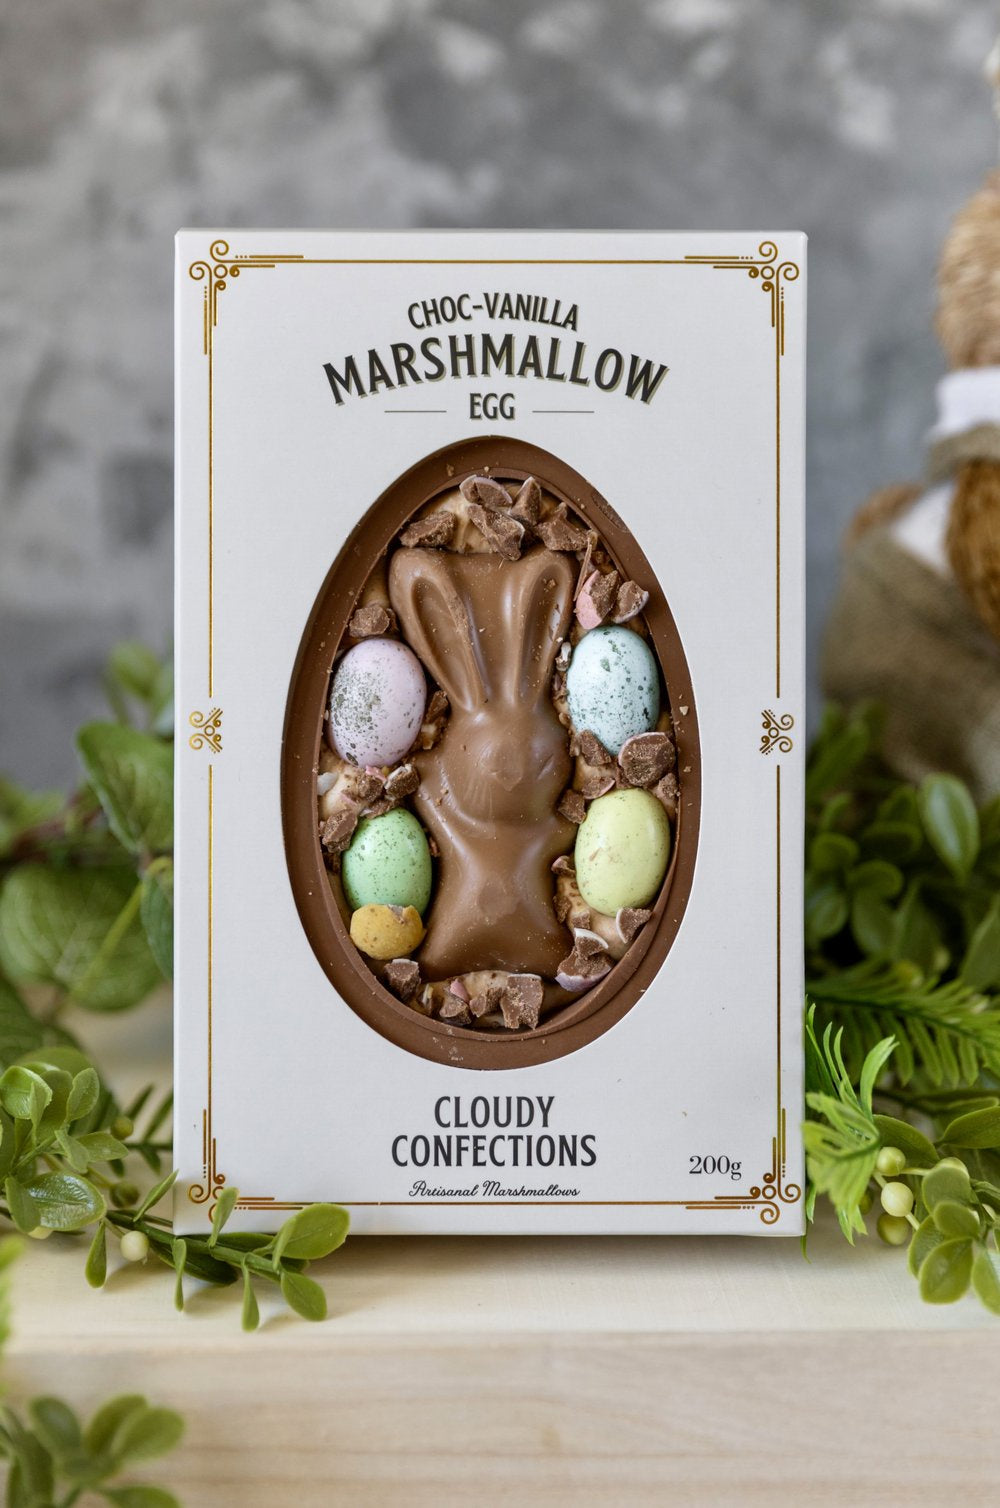 Choc-Vanilla Marshmallow Easter Egg